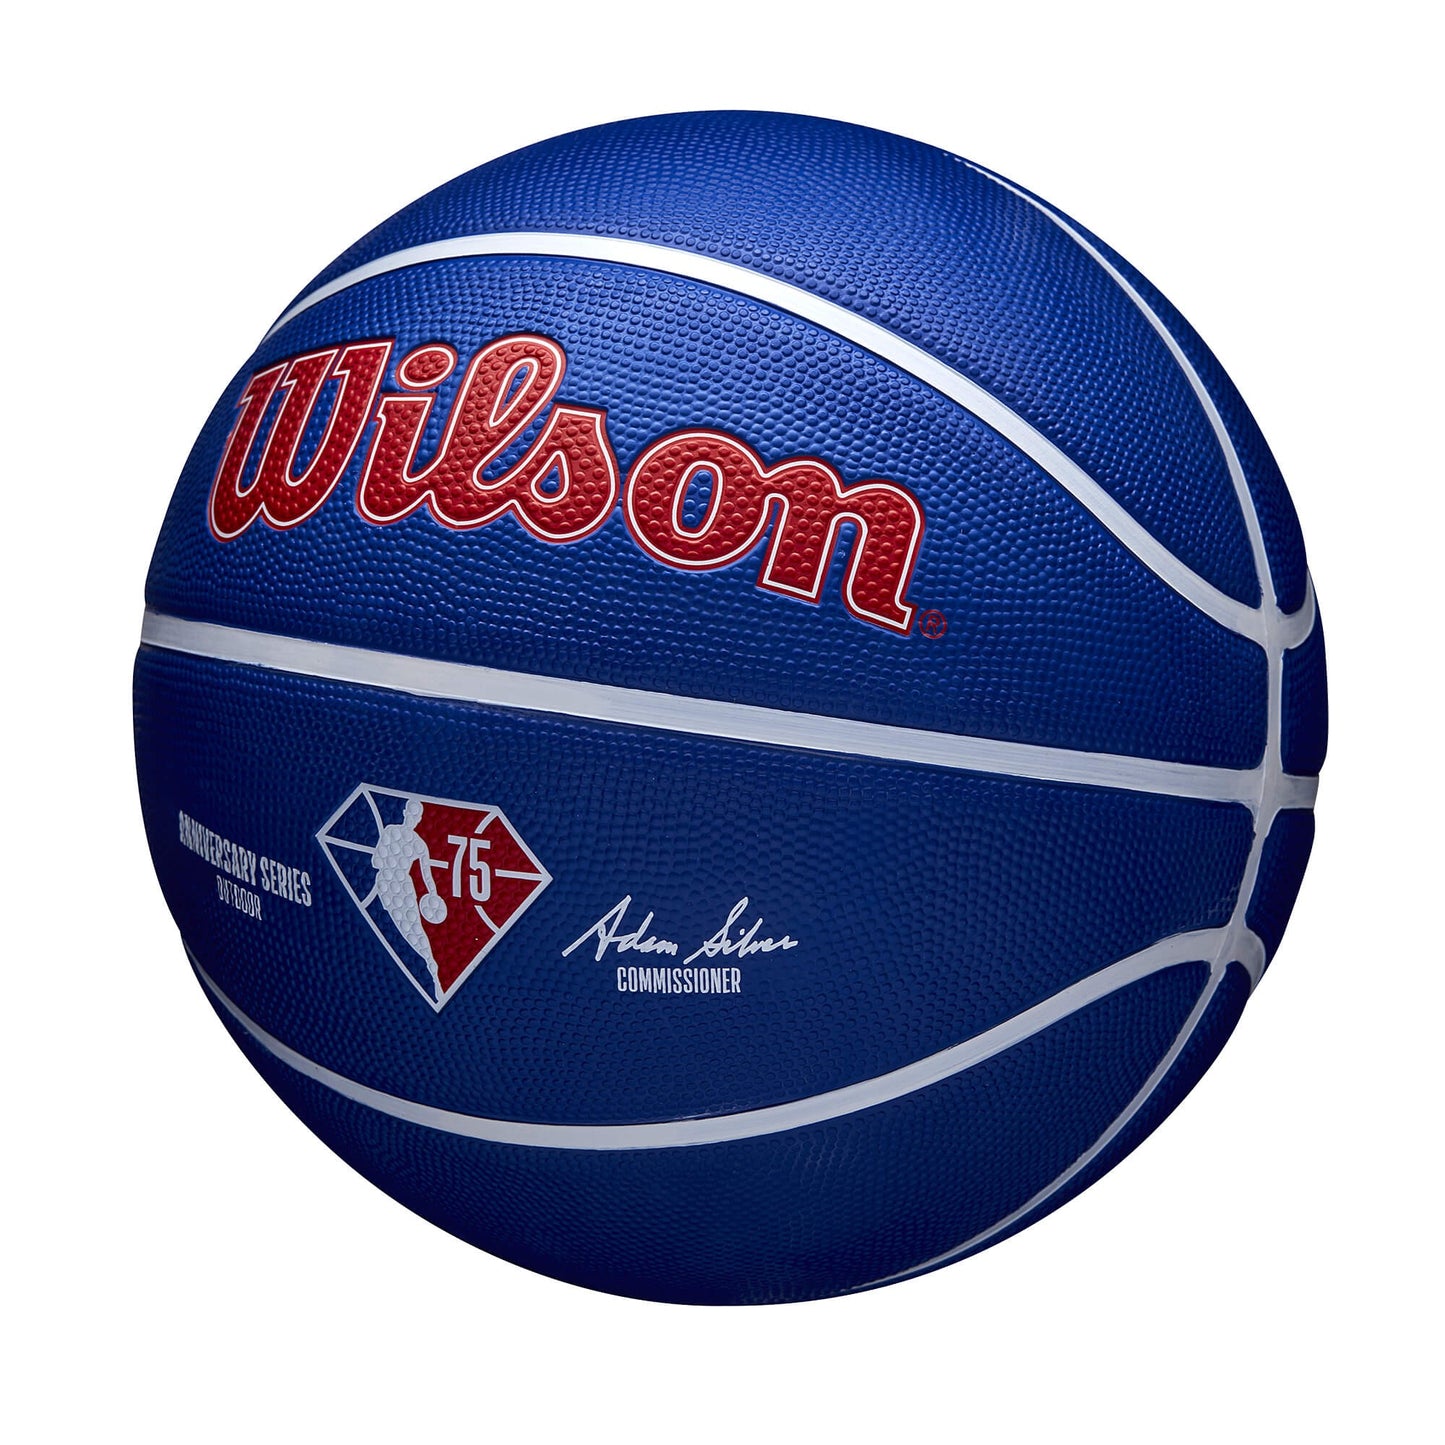 Wilson NBA 75th outdoor Blue (Sz. 7)